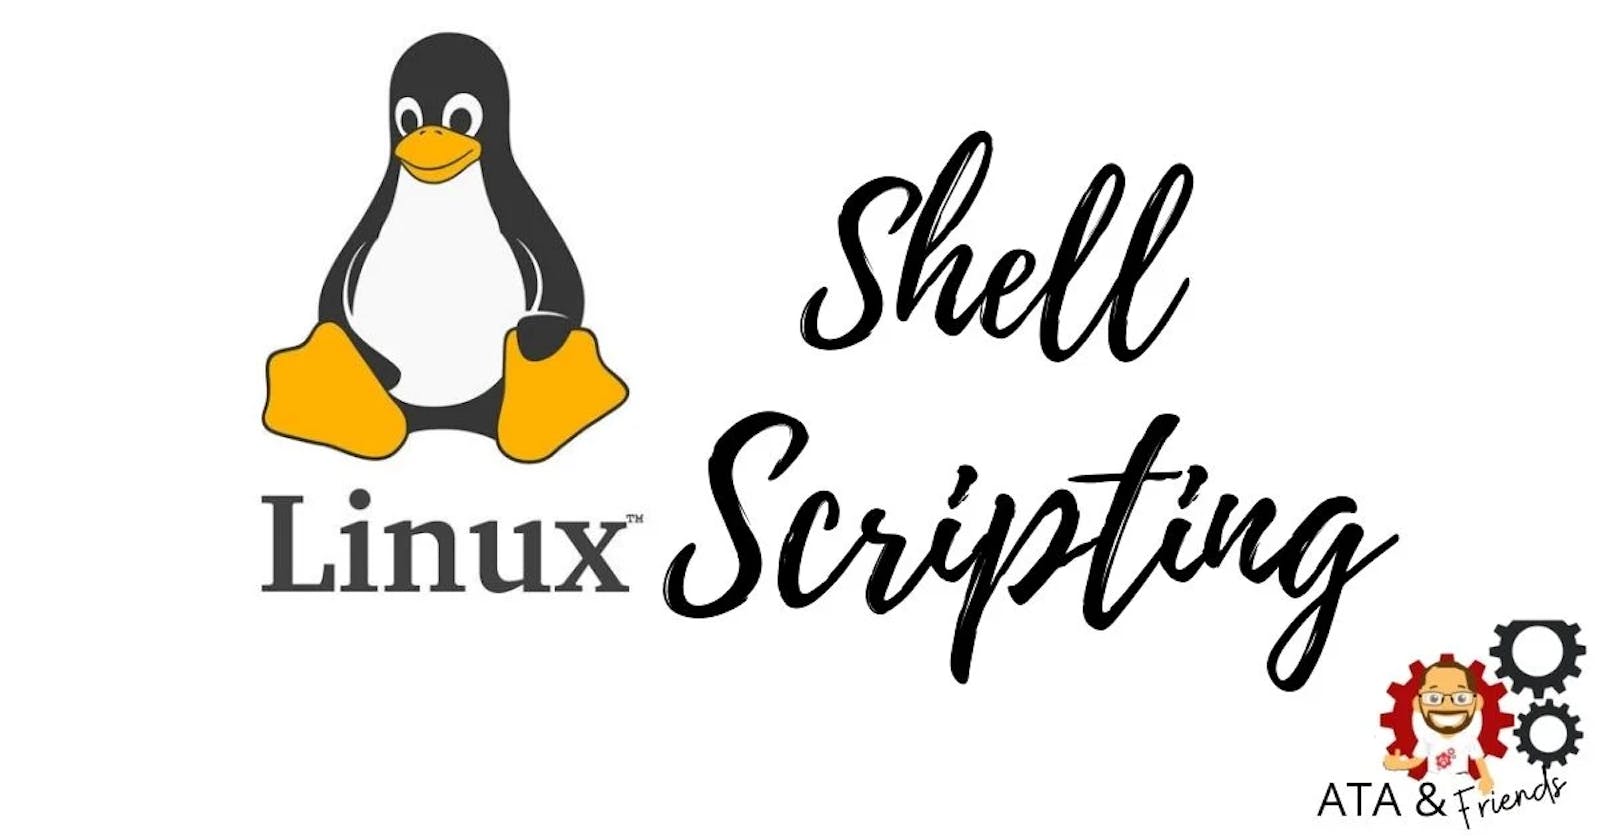 Shell Script Basics